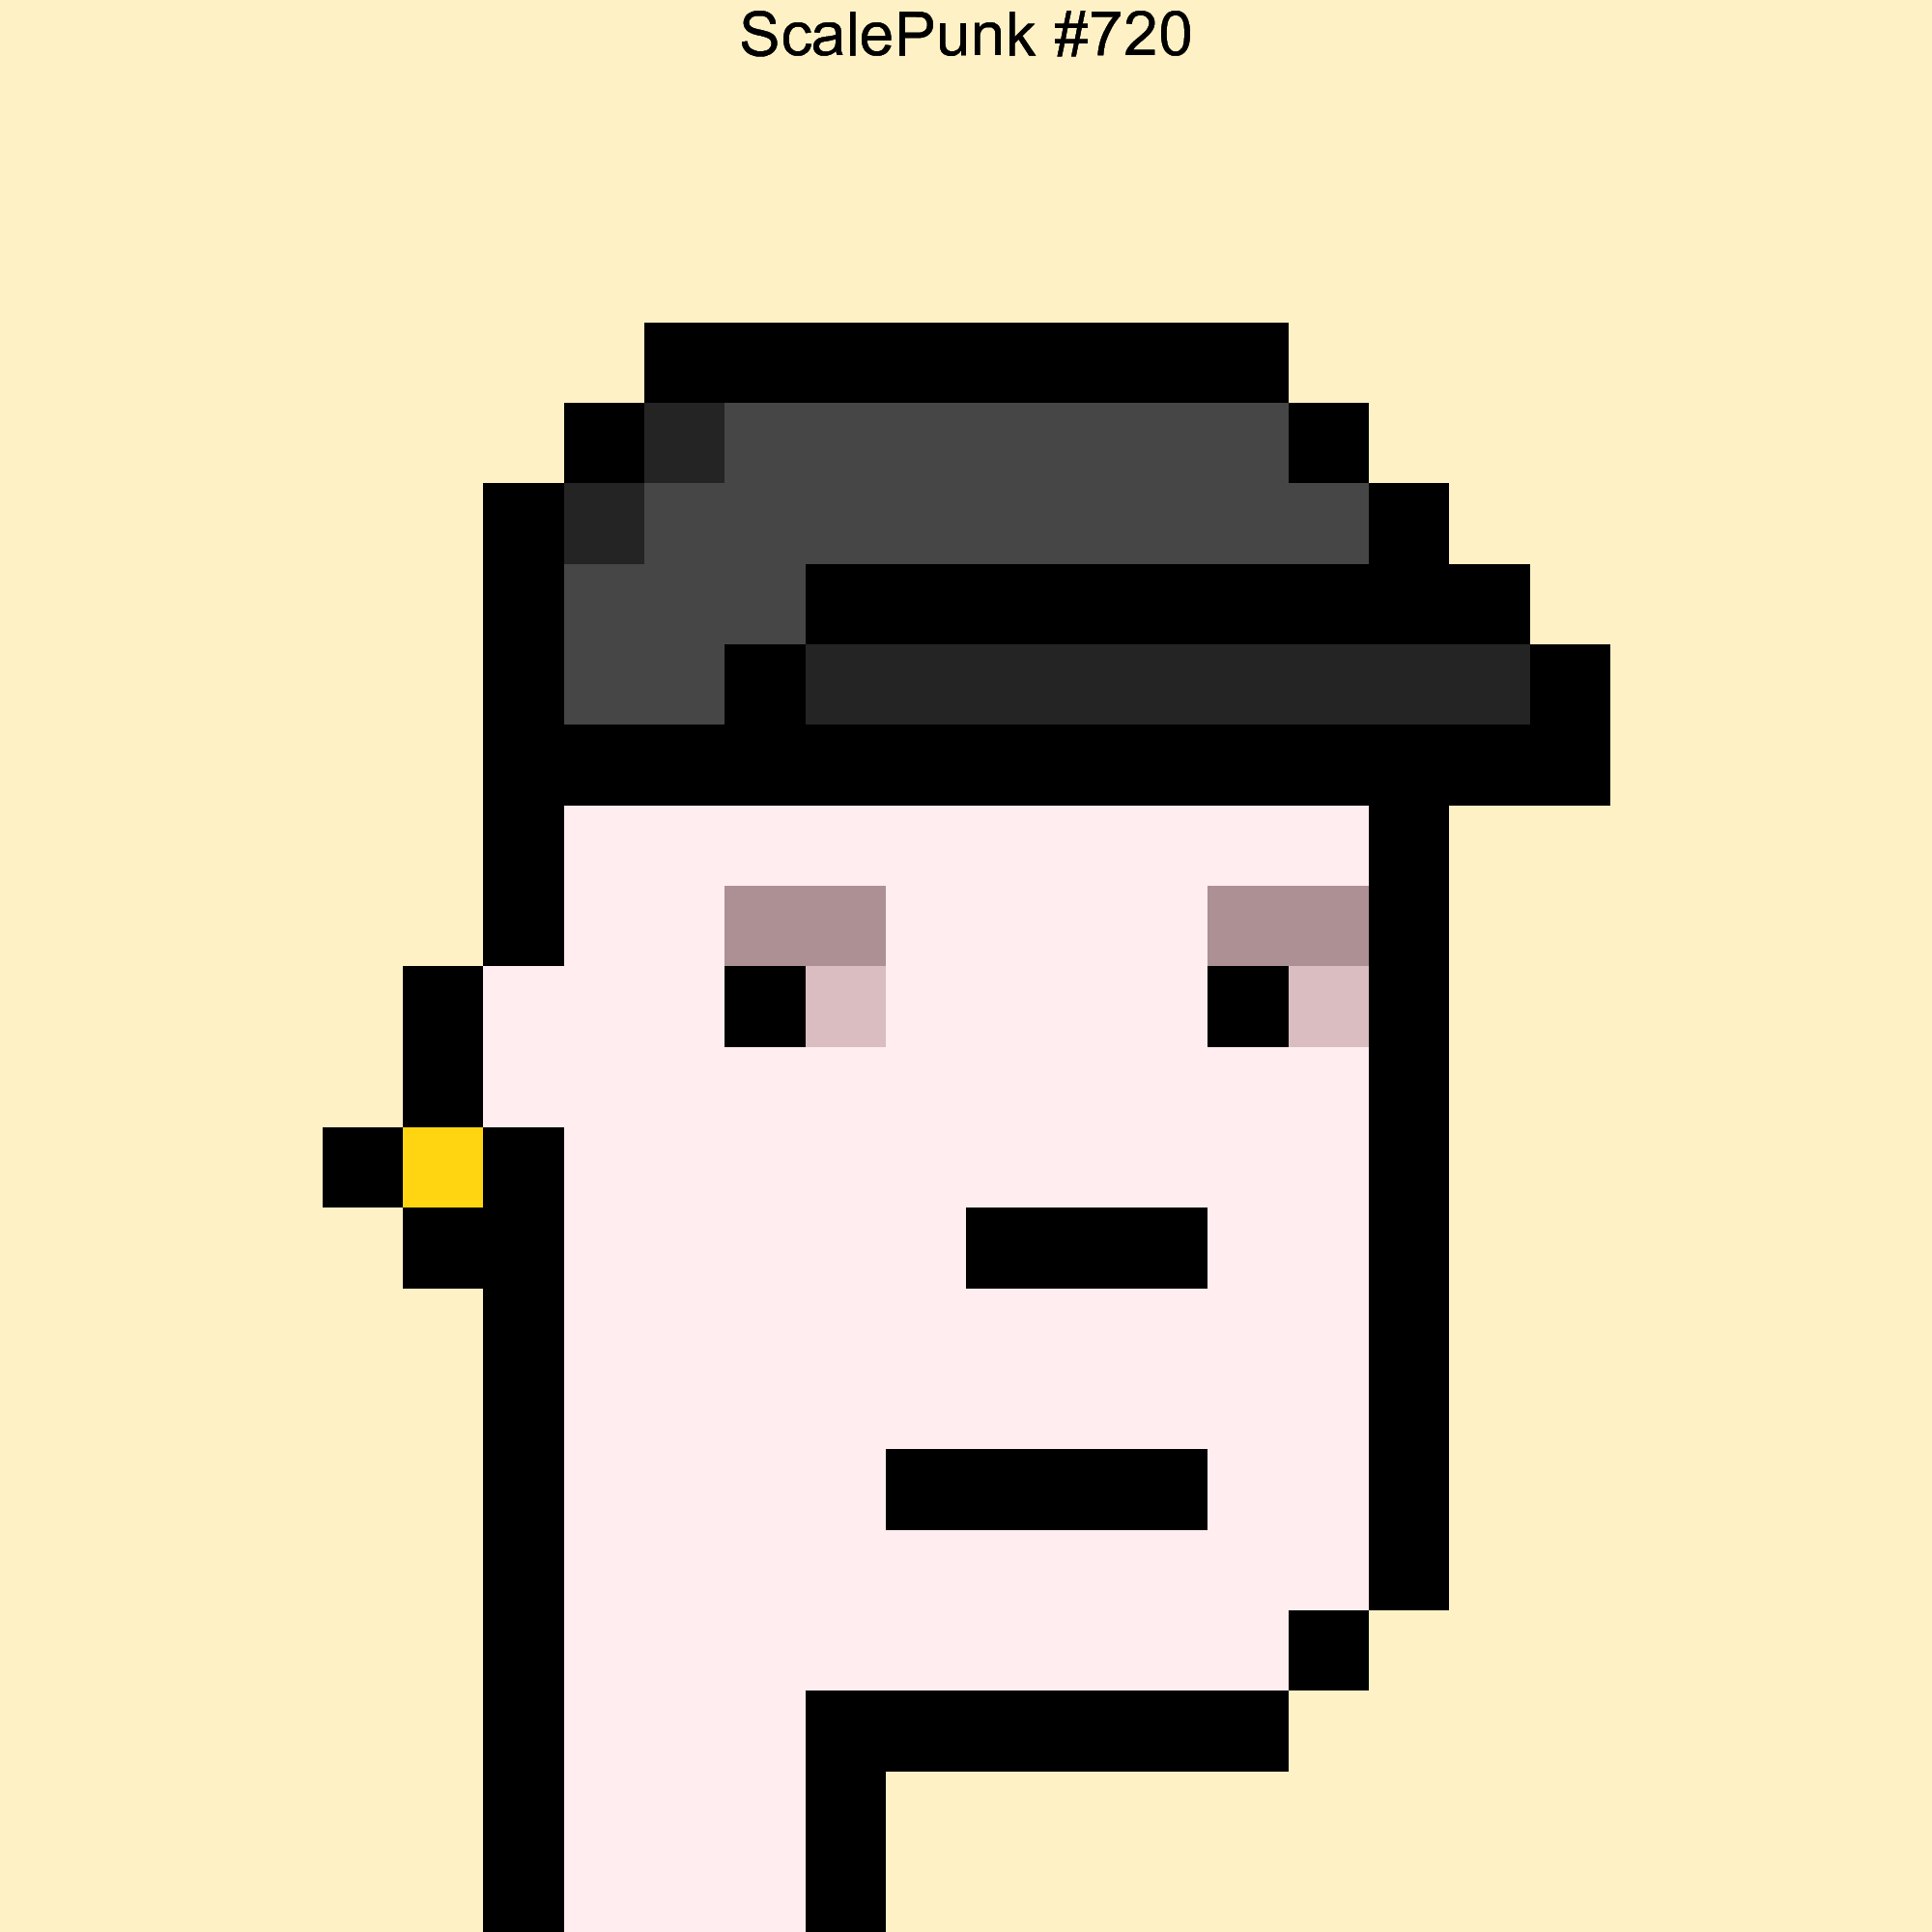 Punk 720